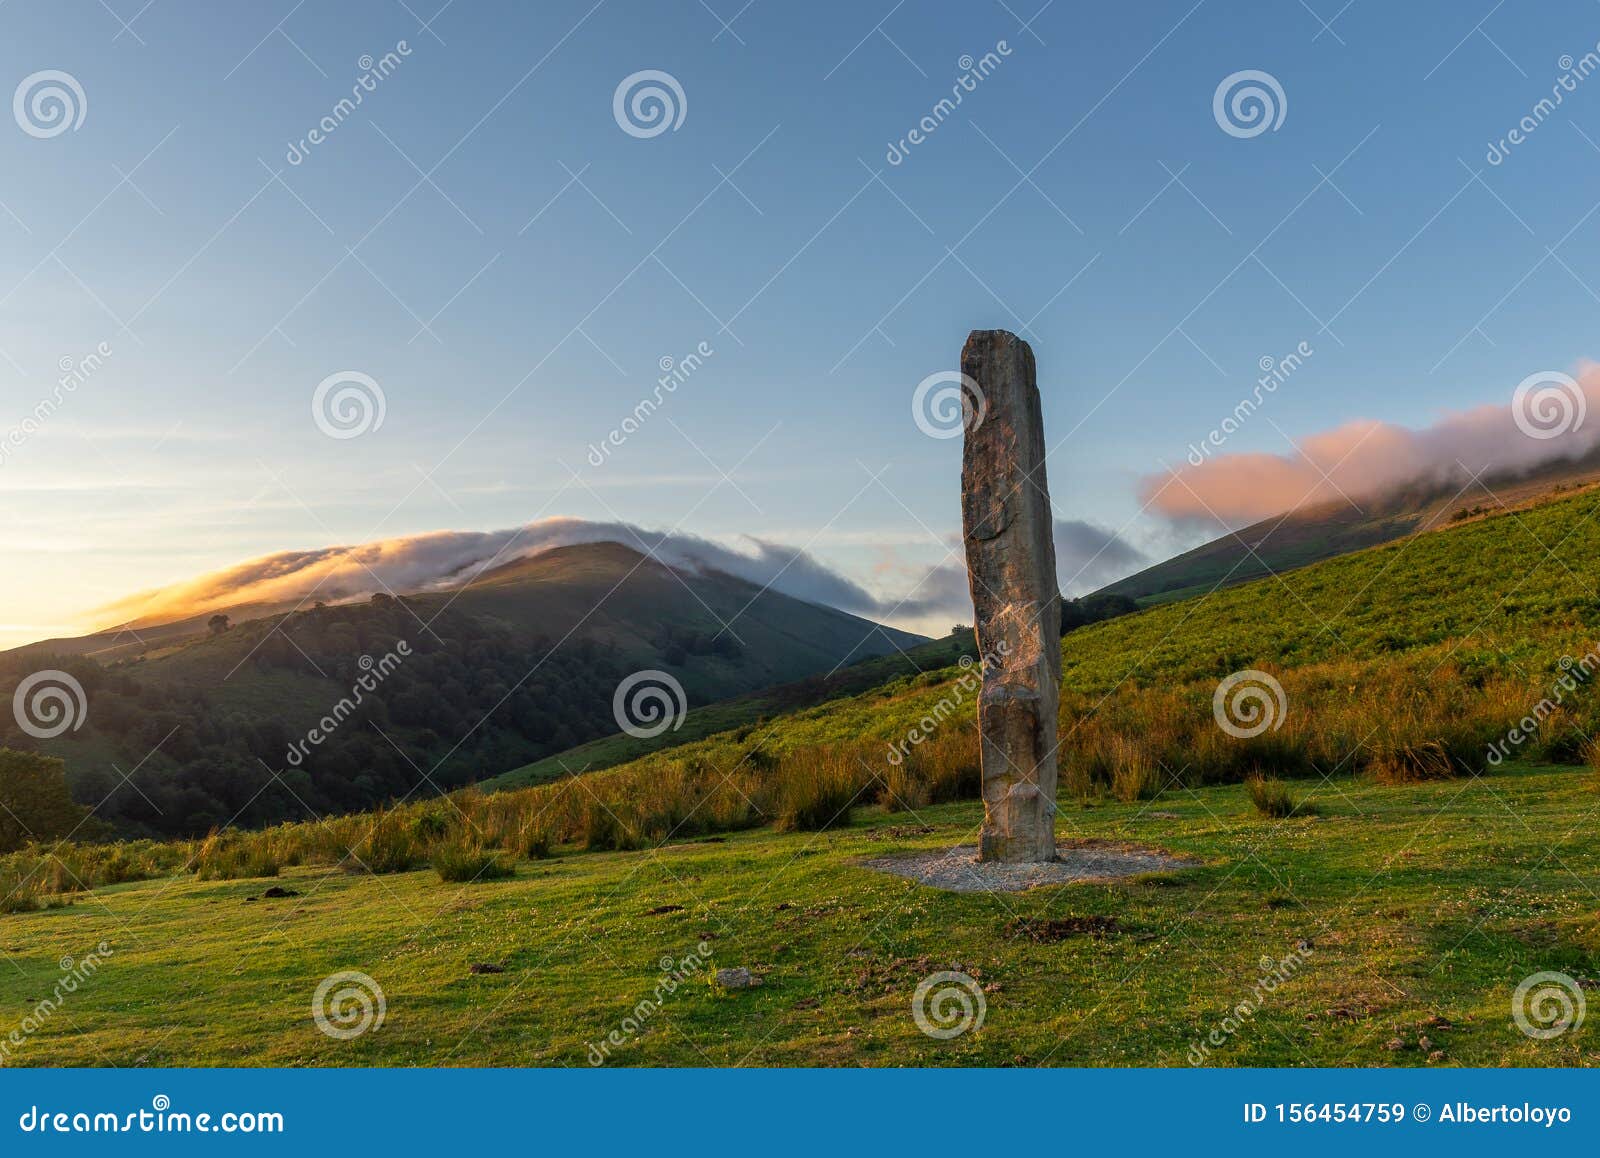 menhir of arlobi at sunset, gorbea natural park, alava, spain